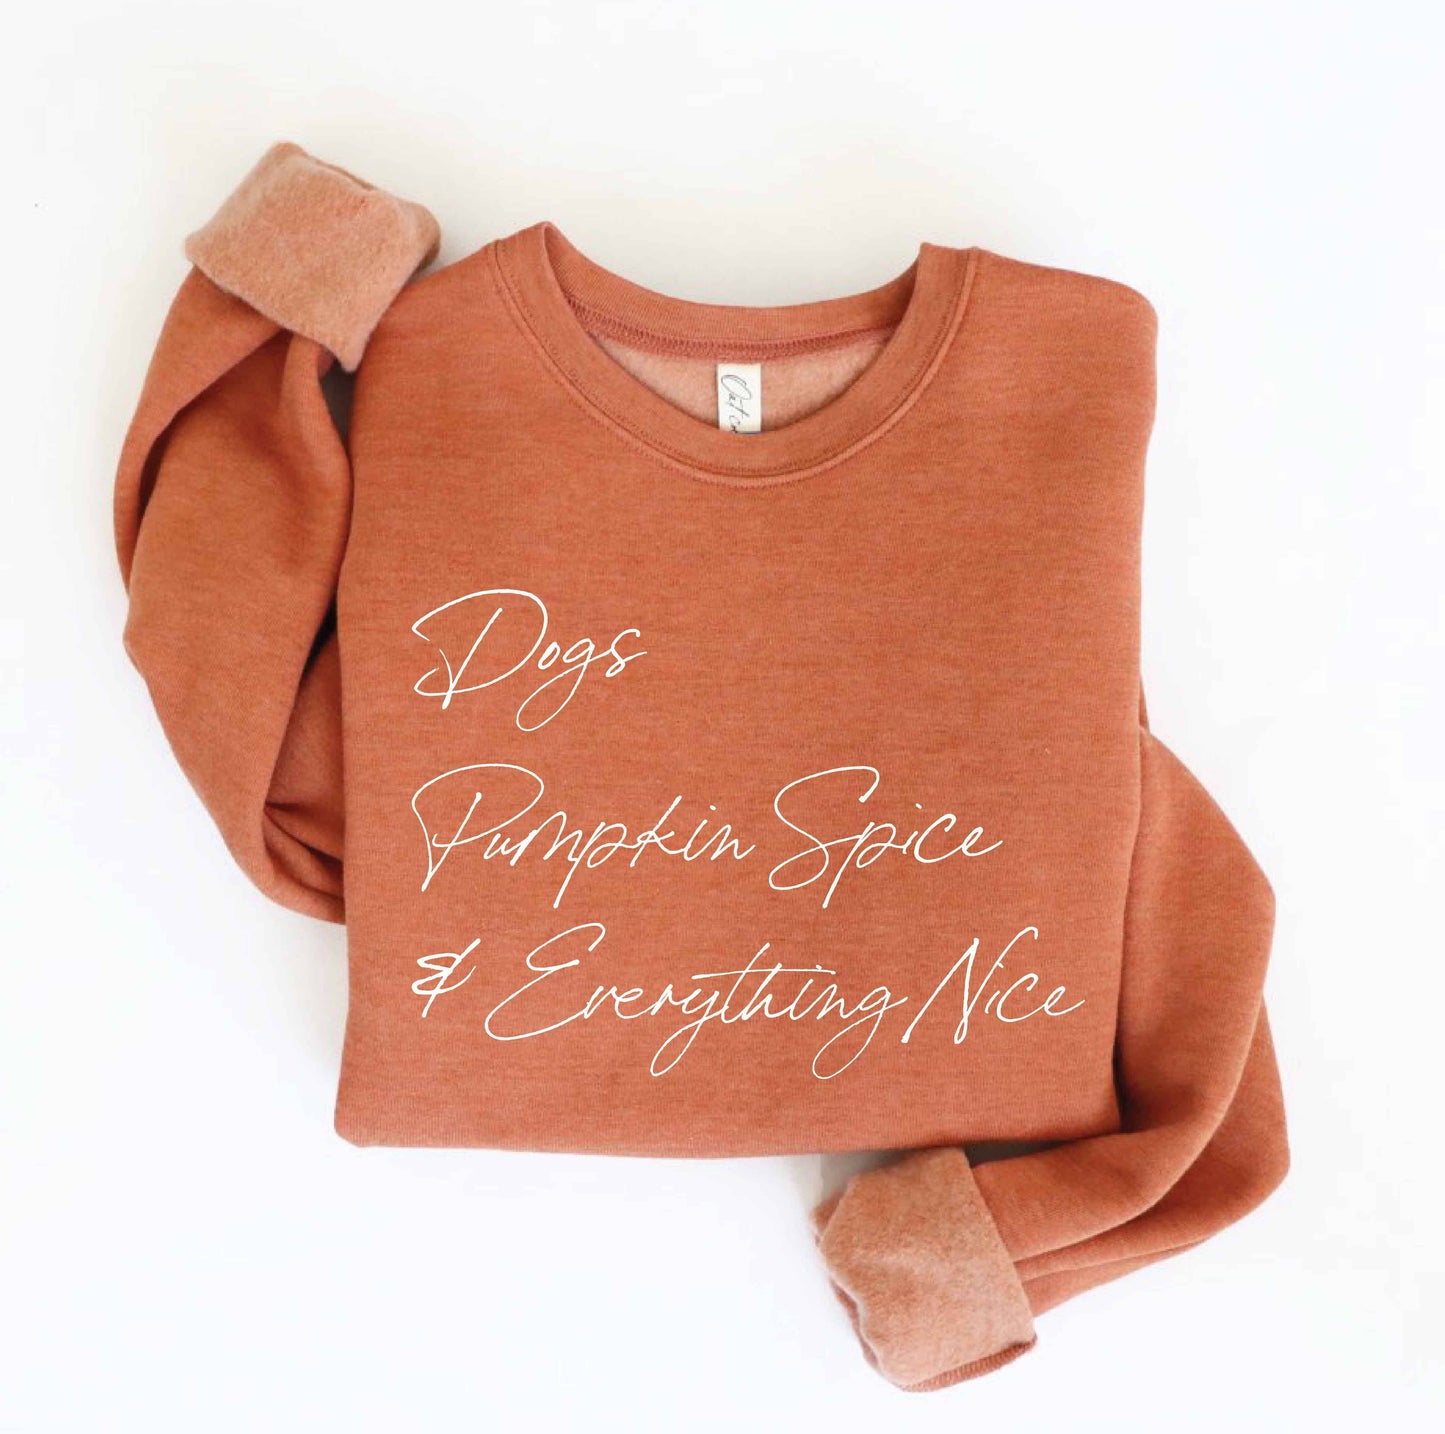 Dogs, Pumpkin Spice, and Everything Nice Sweatshirt